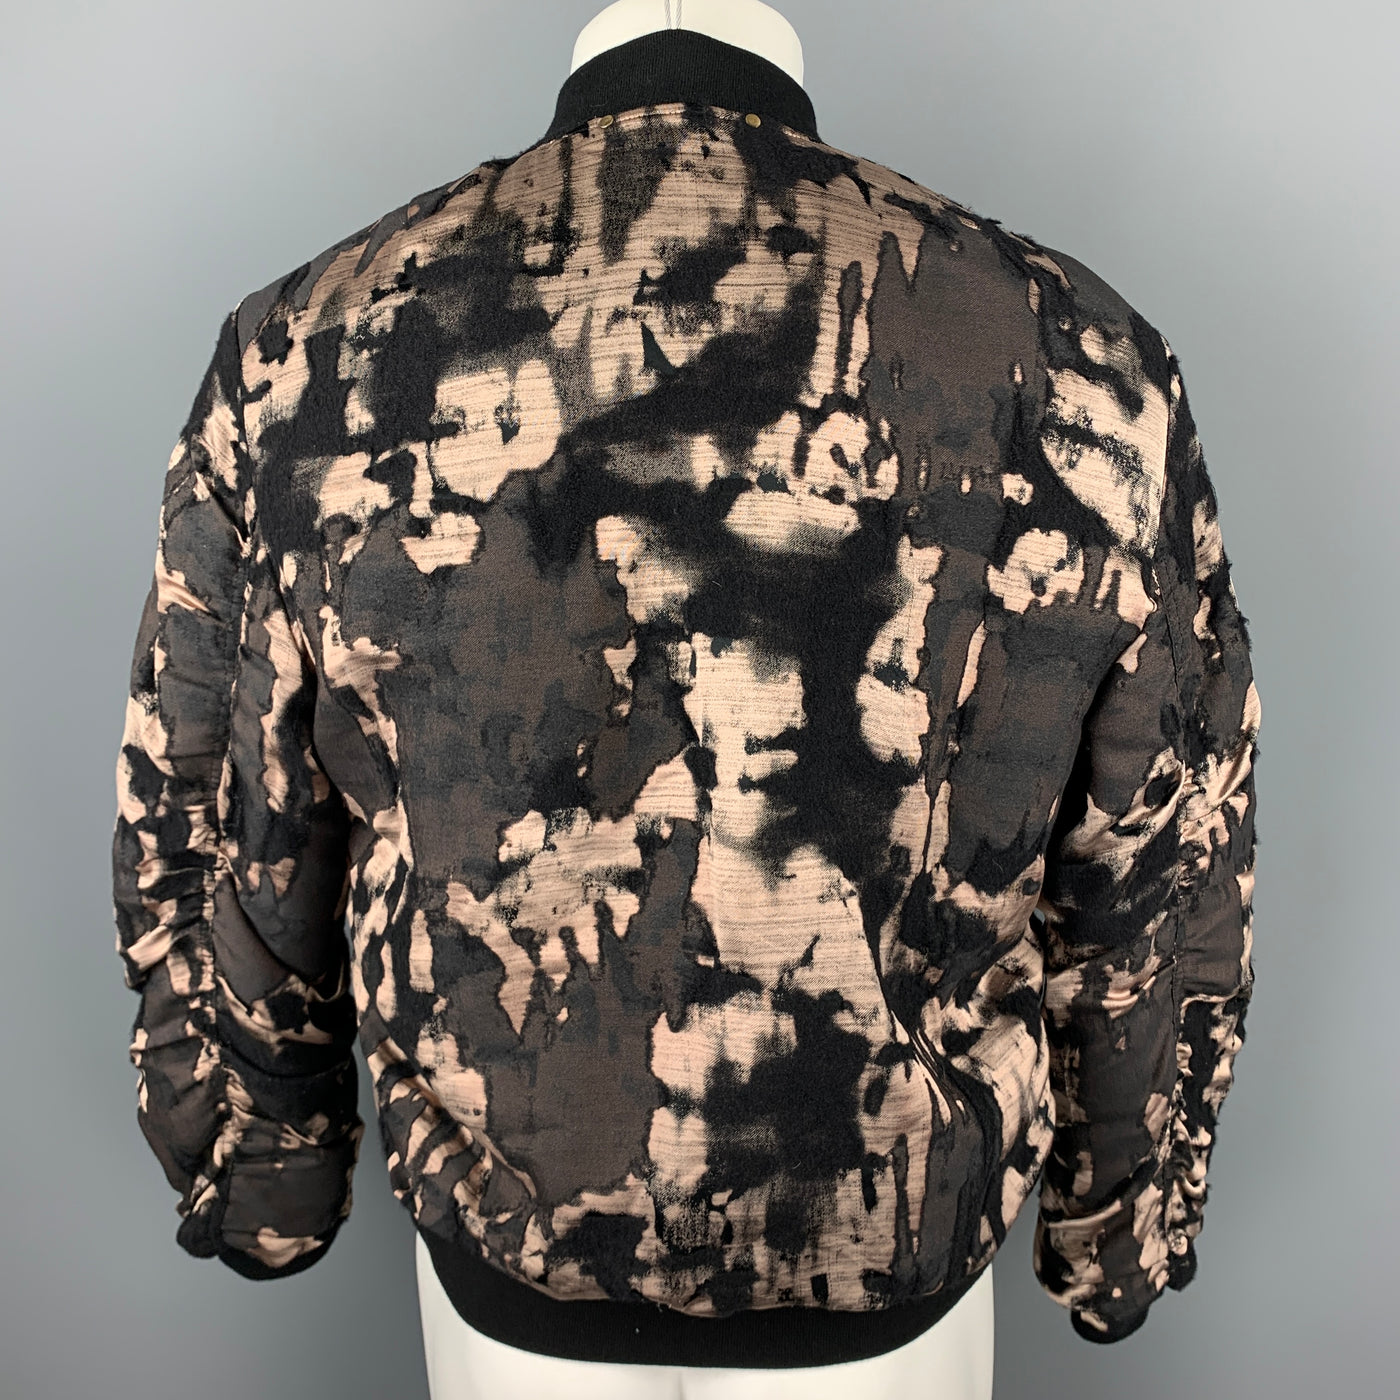 PAUL SMITH Size M Size M Black & Taupe Jacquard Wool Blend Zip Up Reversible Jacket